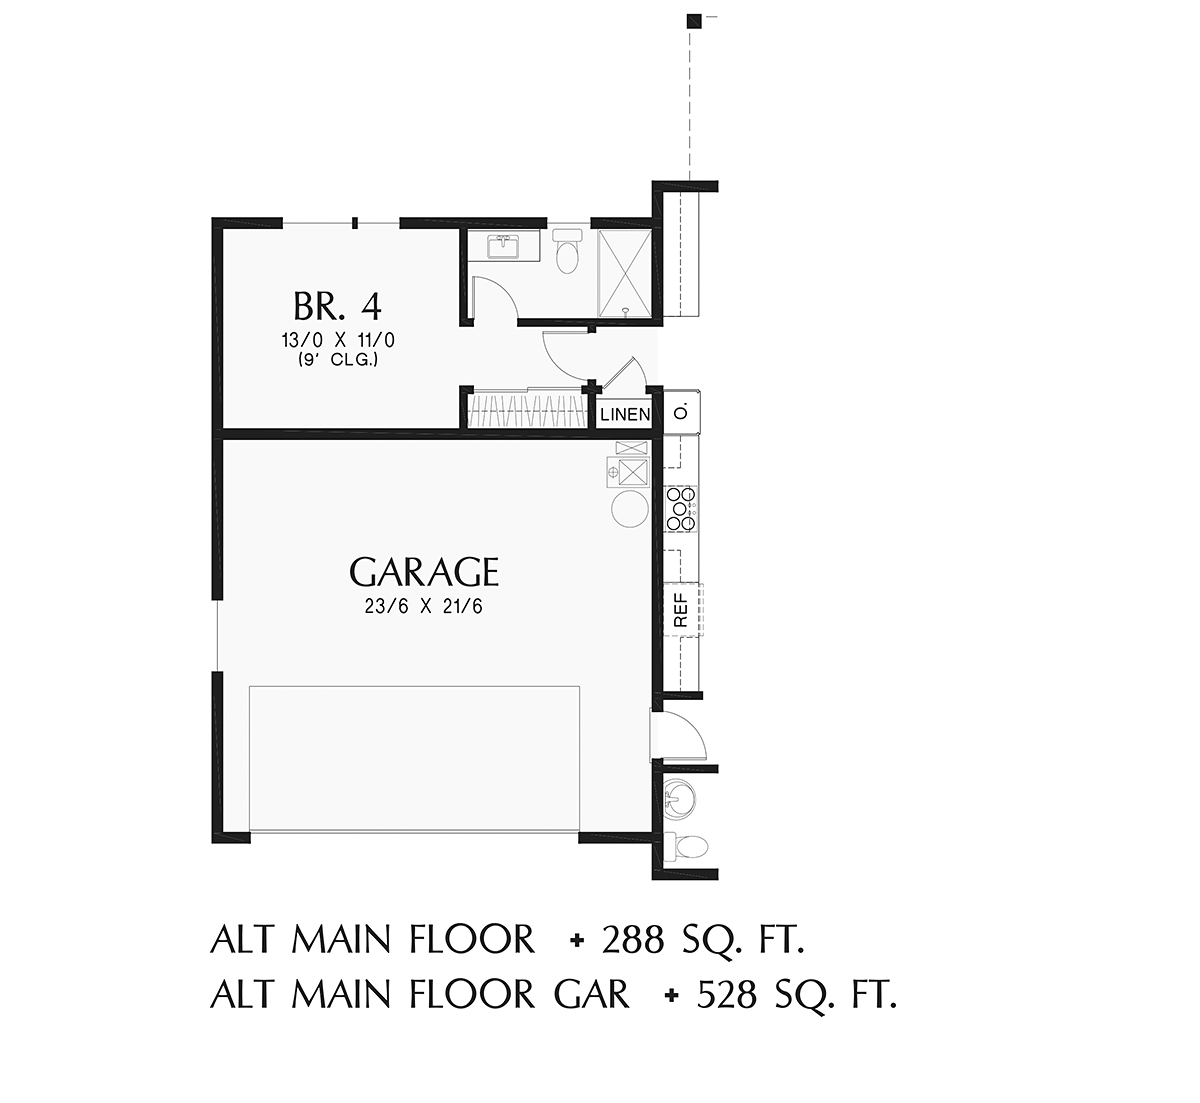 House Plan 81358 Alternate Level One